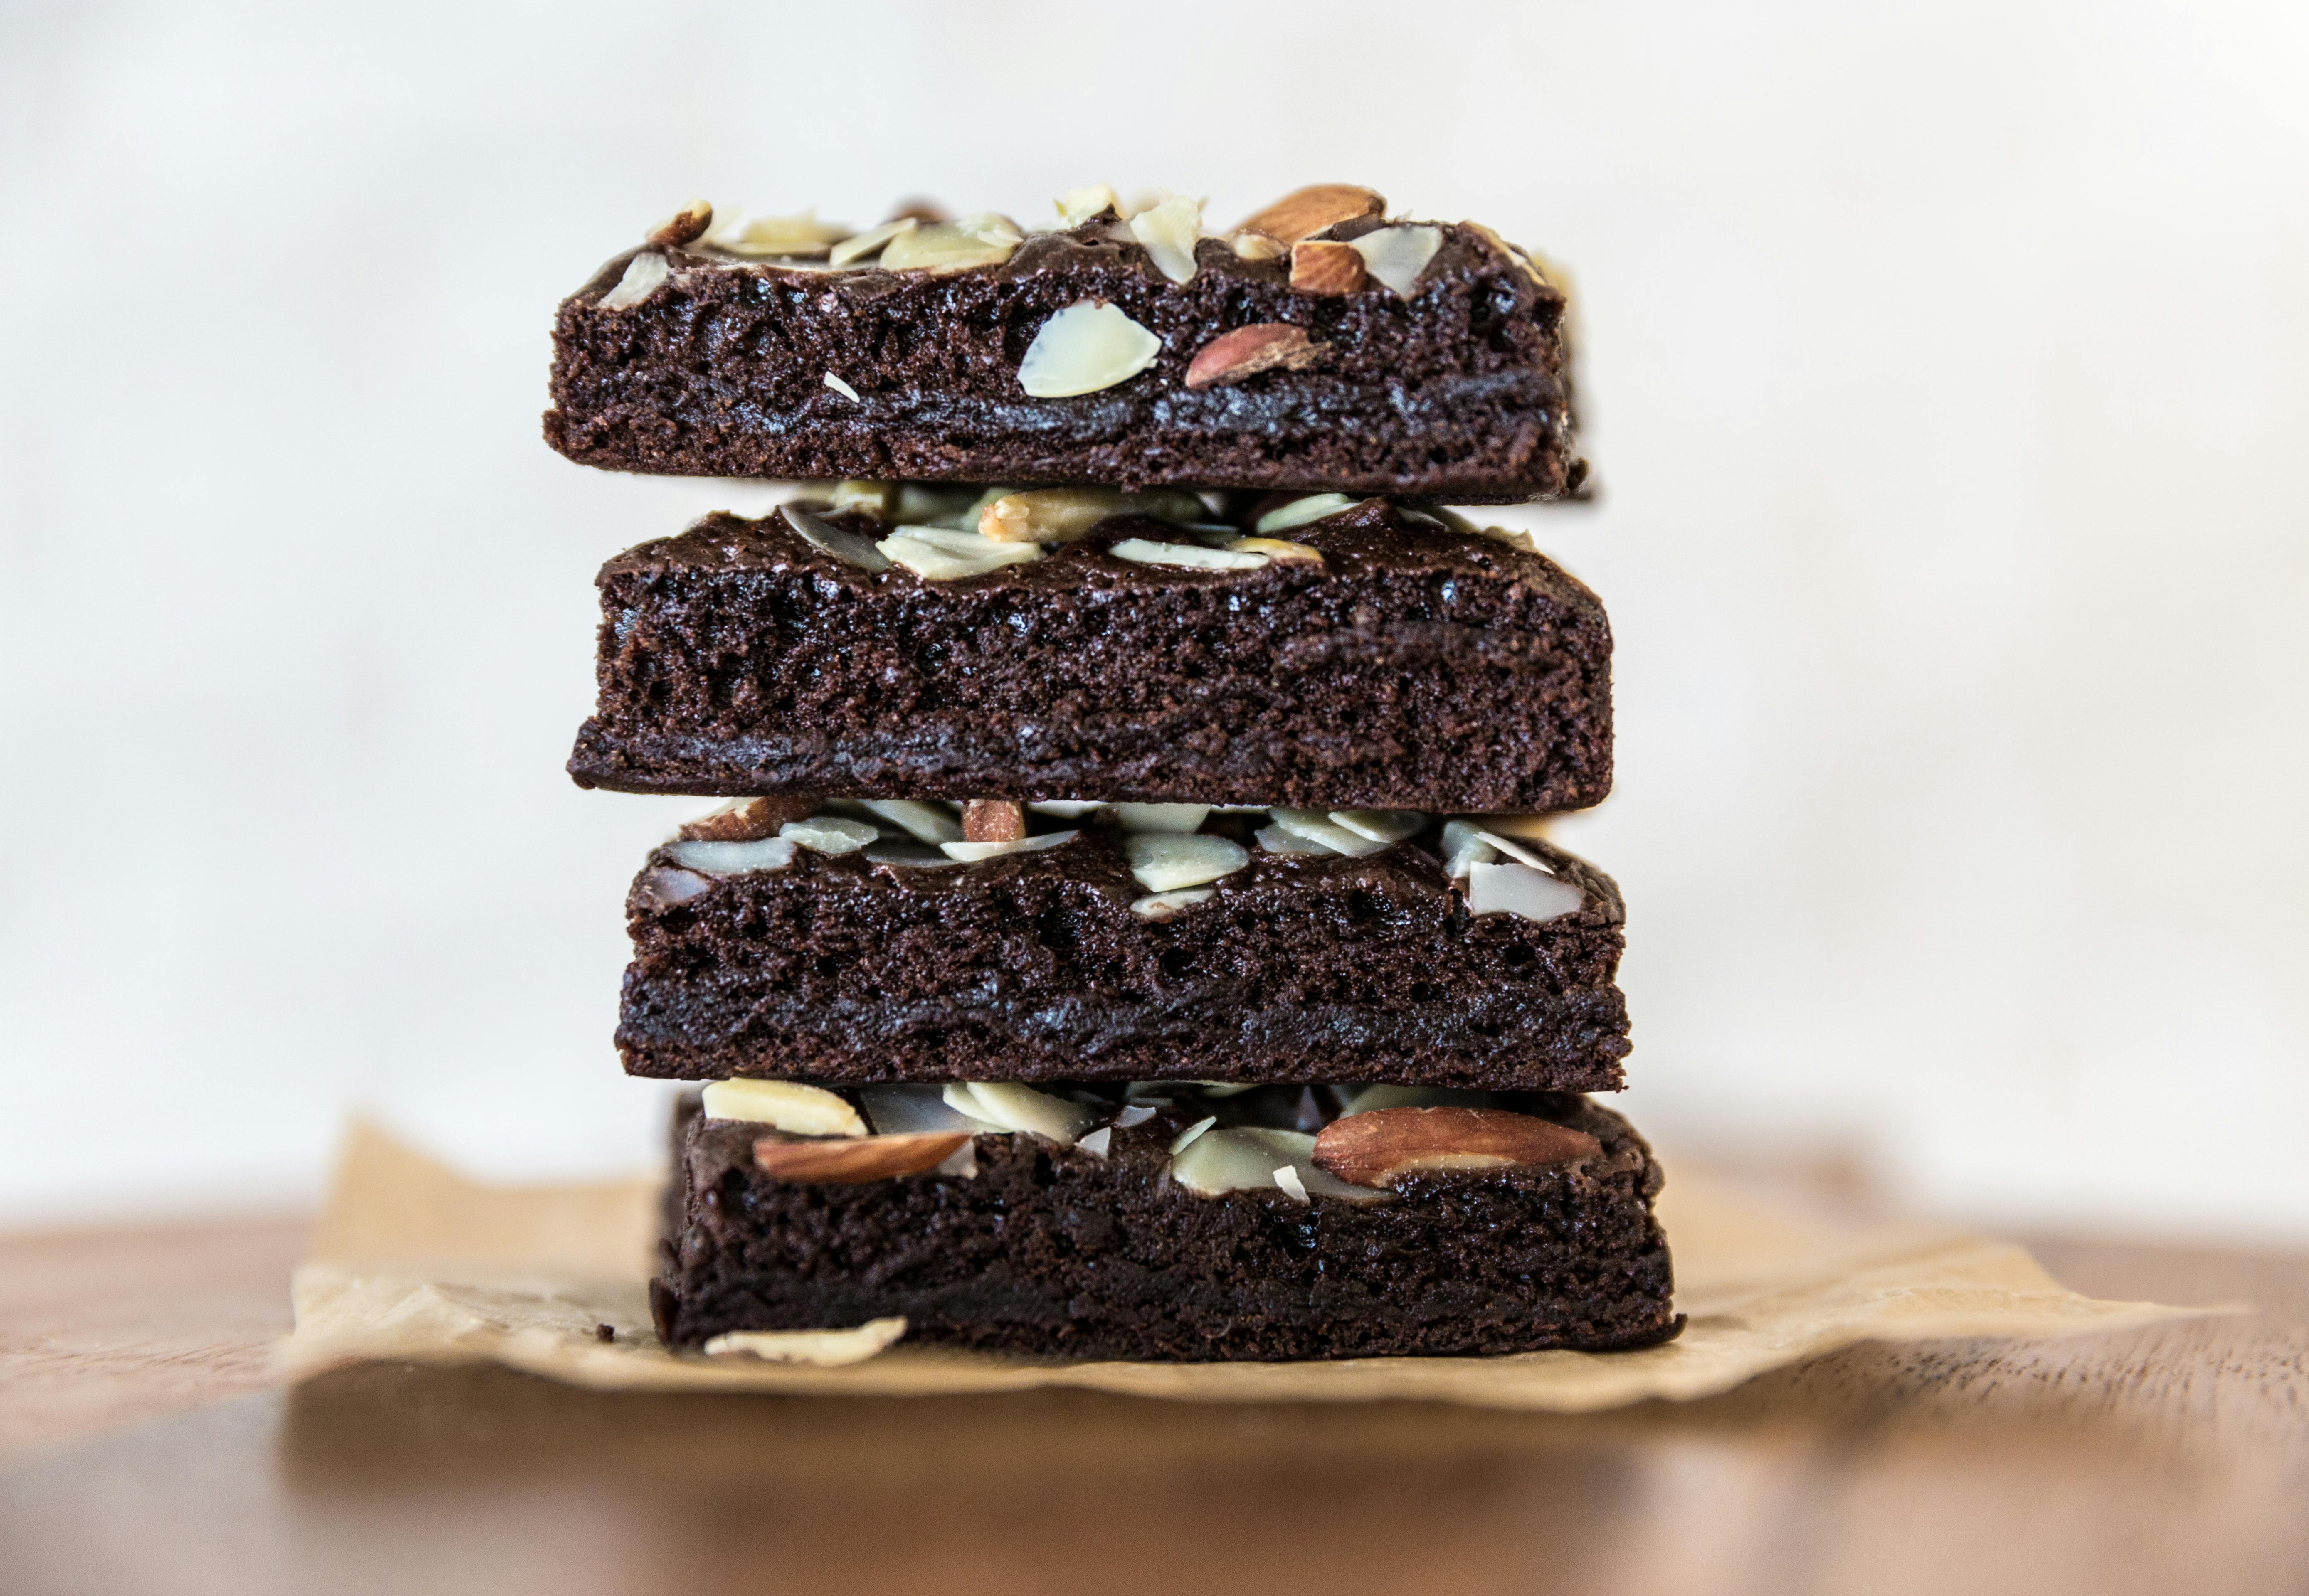 Free stock photo of Chocolate brownie stack